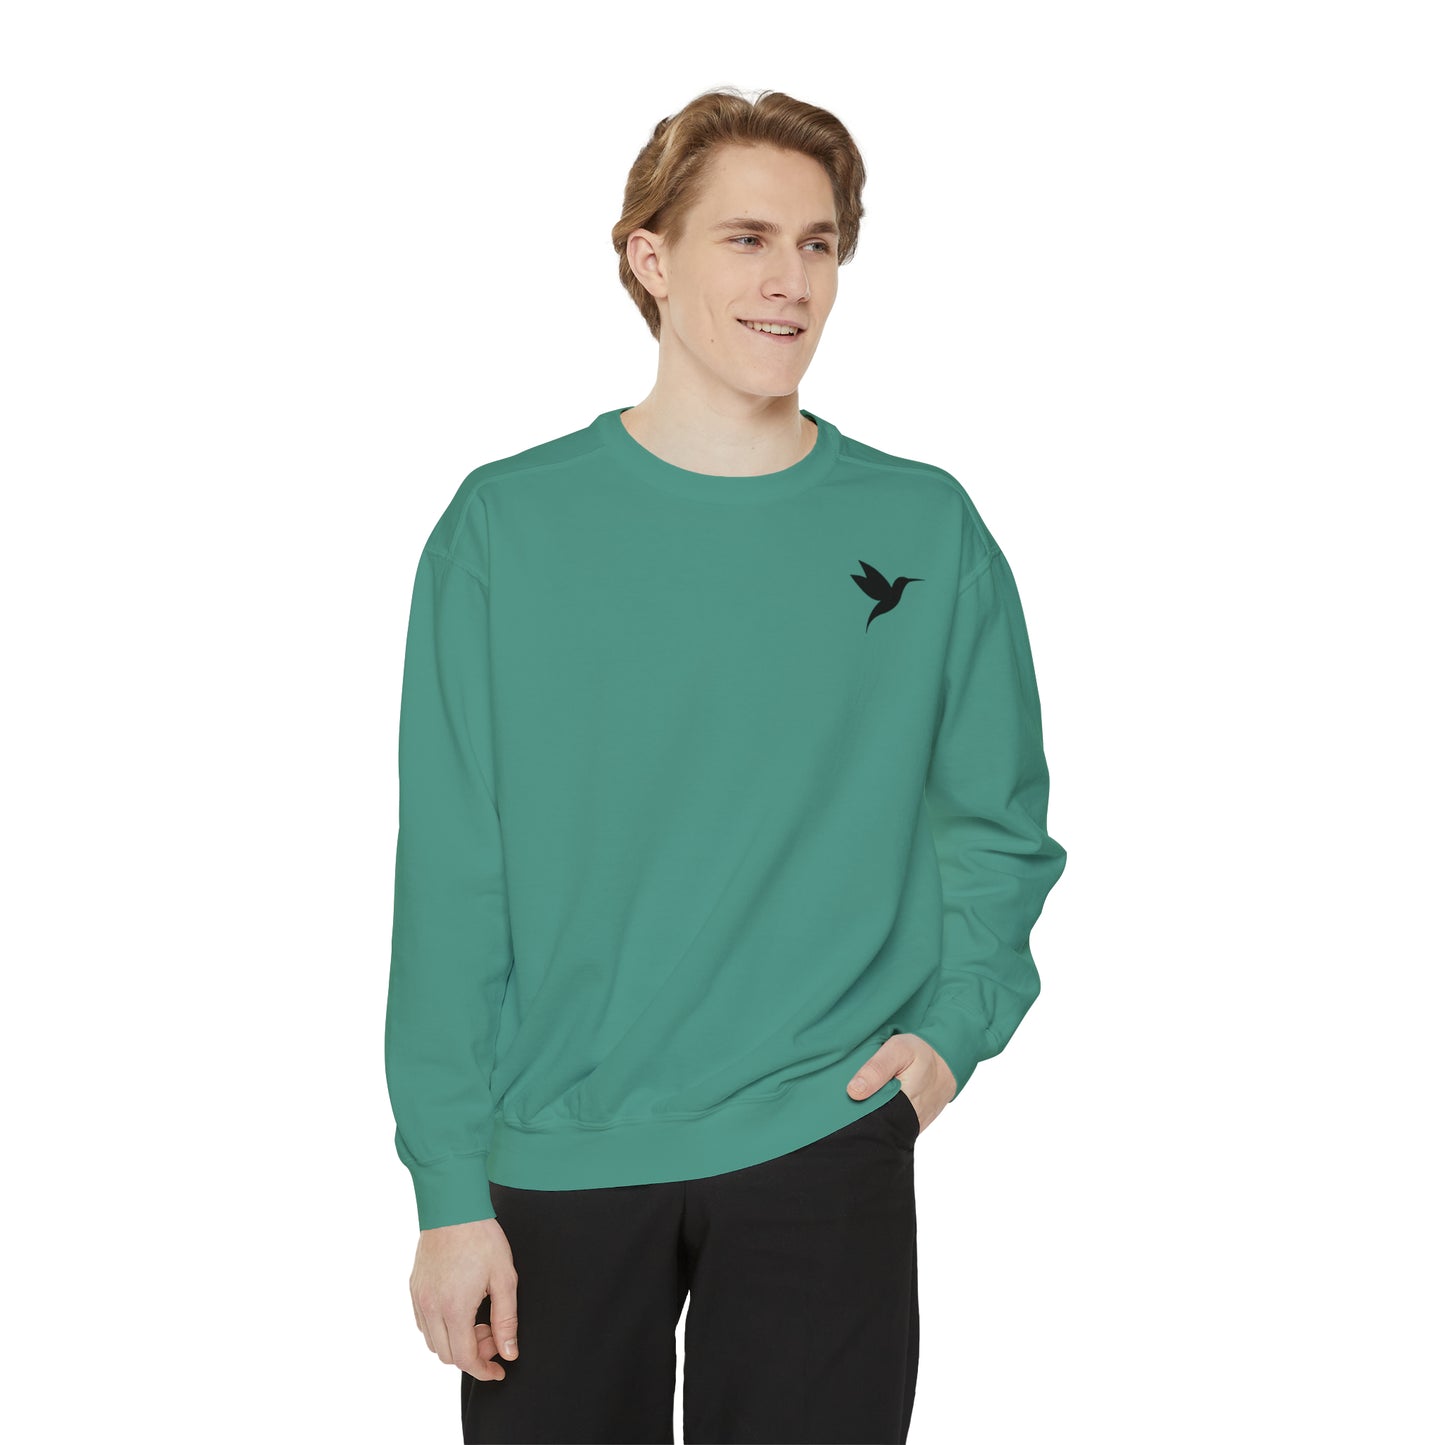 All the Gods Unisex Garment-Dyed Sweatshirt